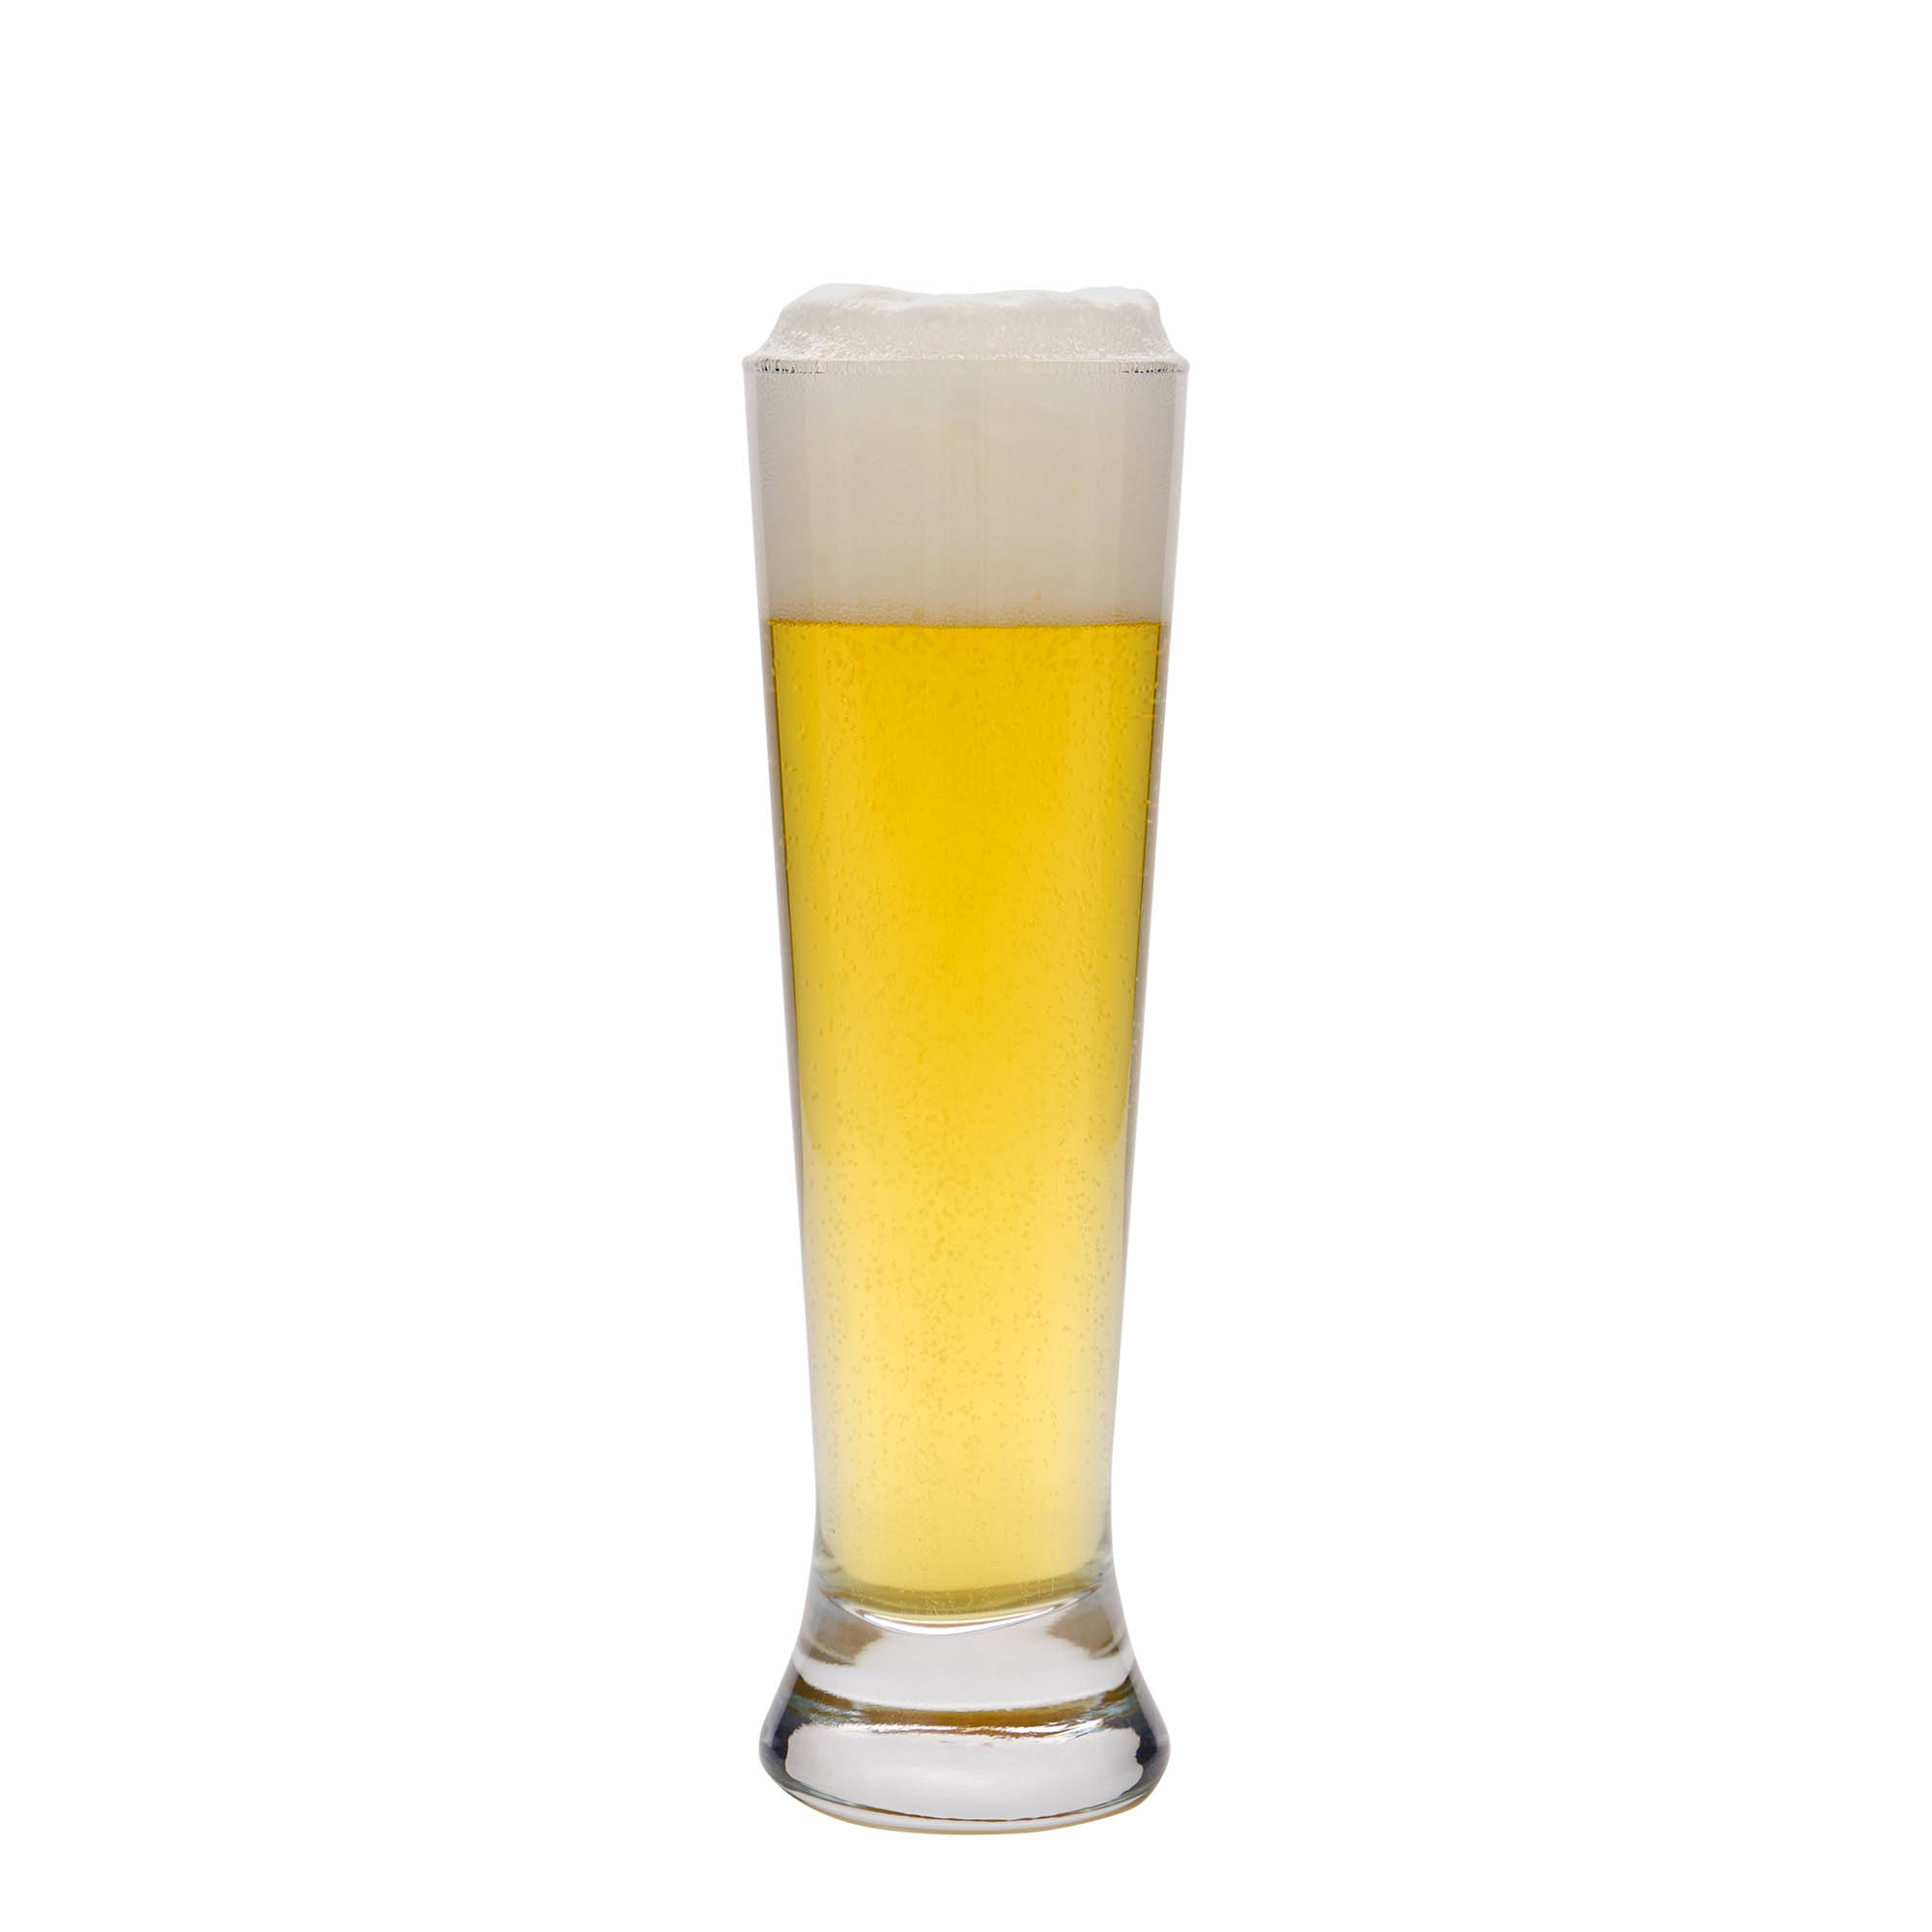 300 ml beer glass 'Merkur', glass